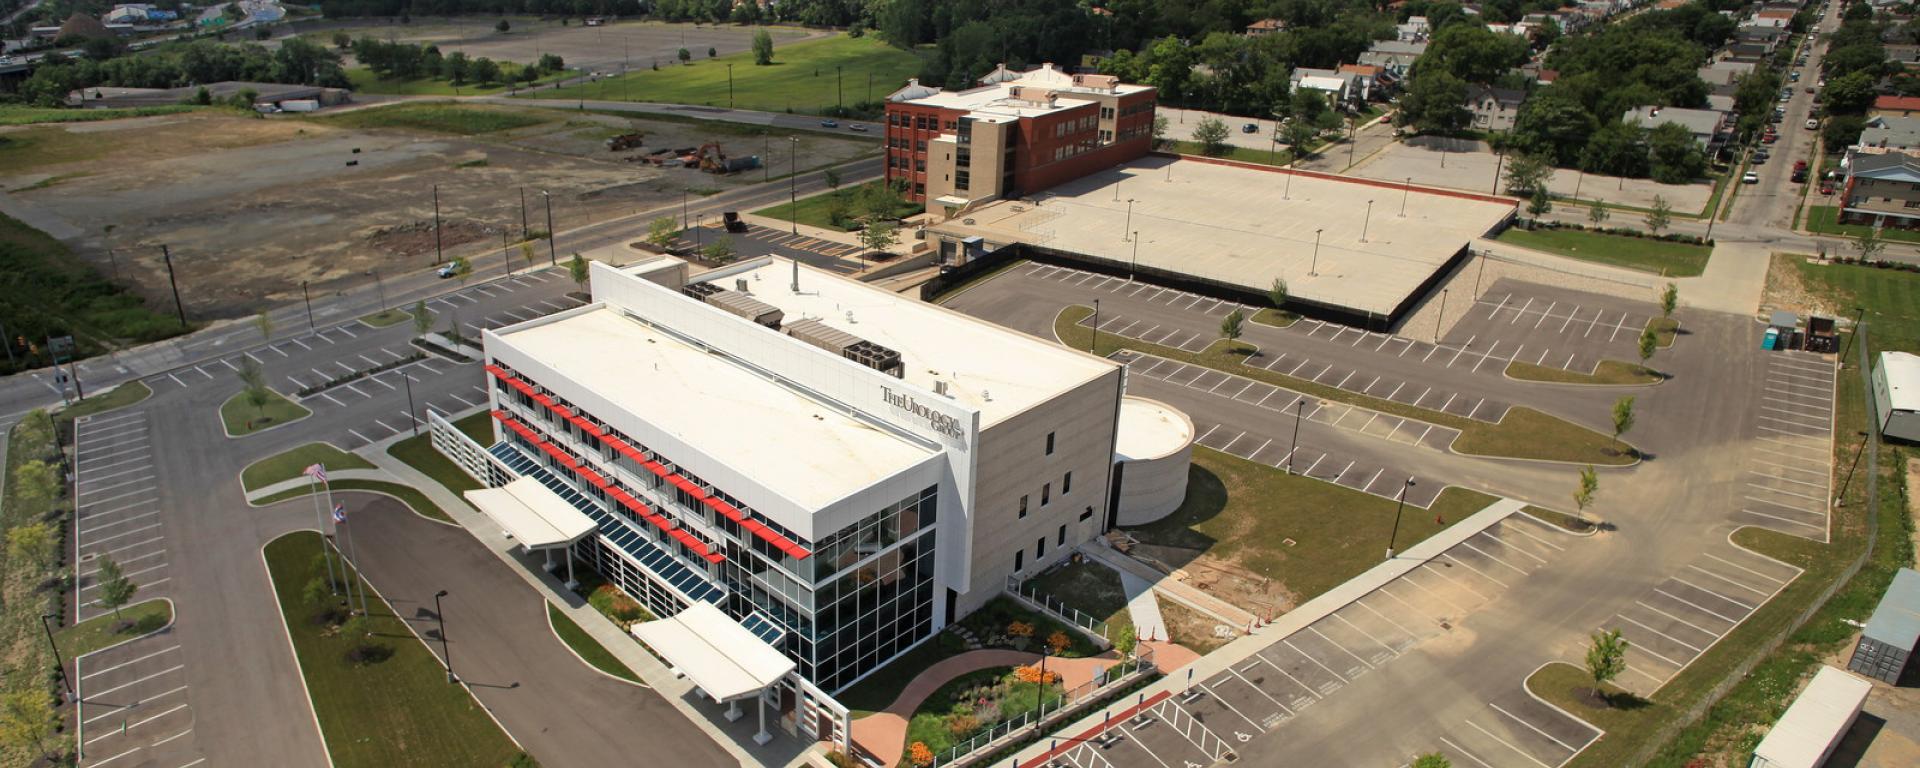 aerial of facility campus